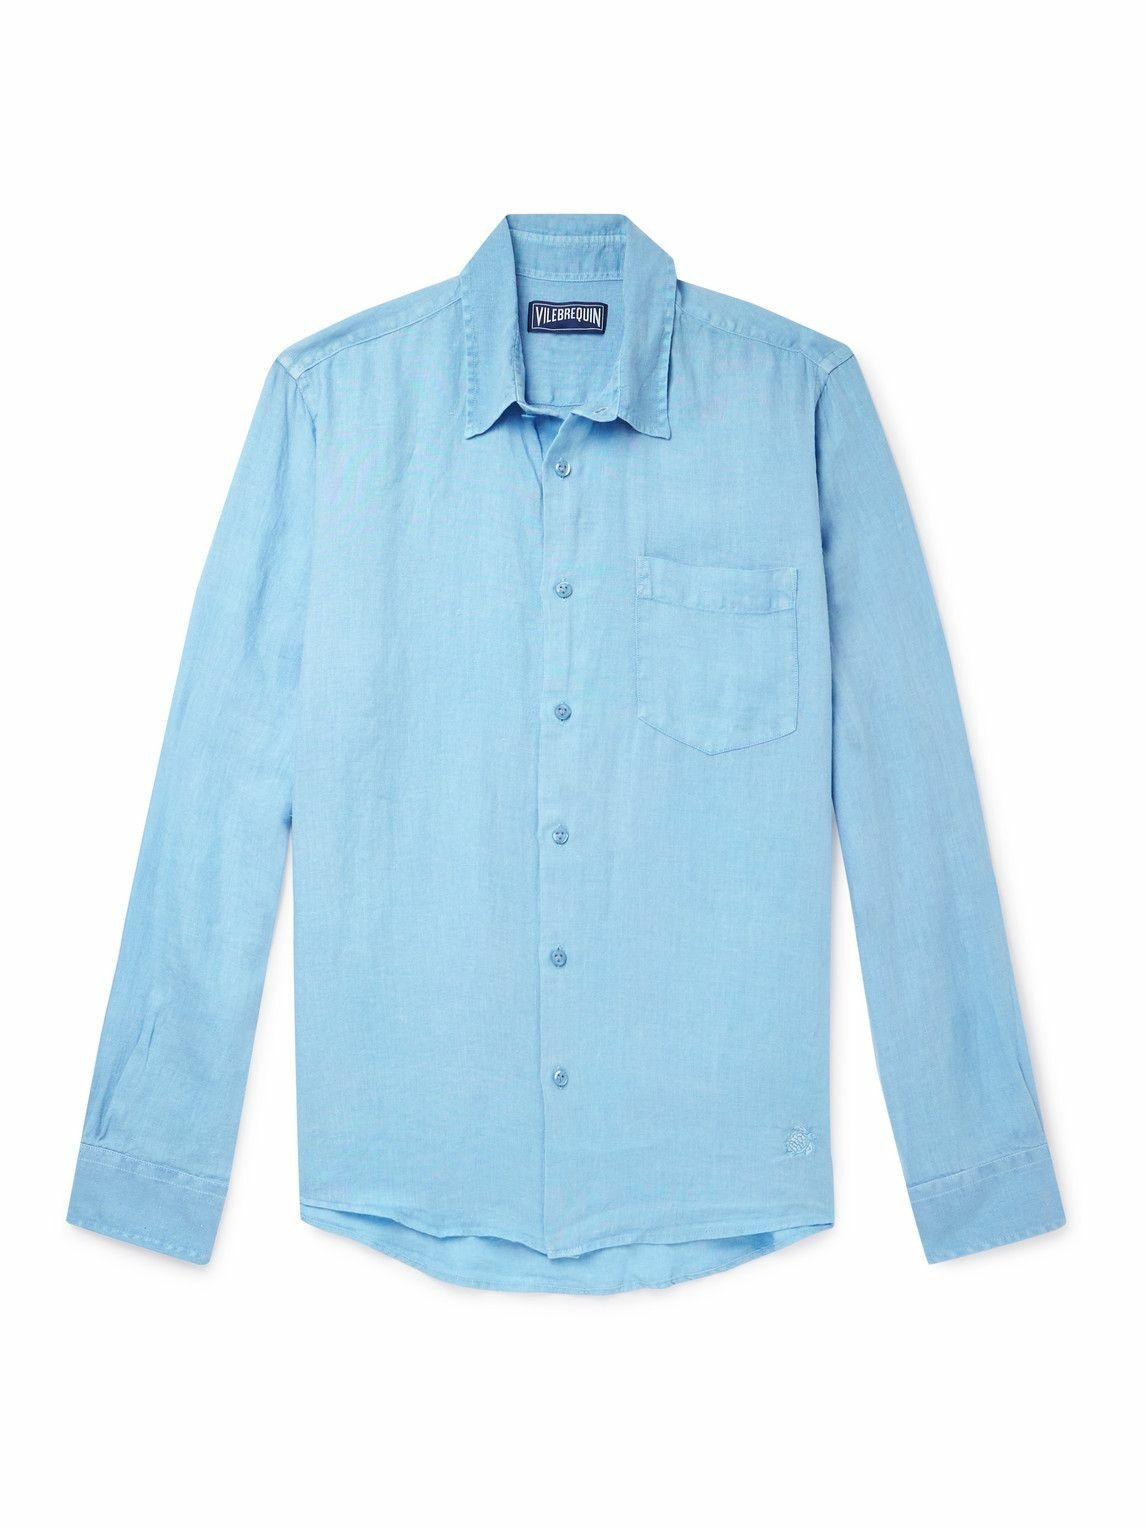 Vilebrequin - Caroubis Linen Shirt - Blue Vilebrequin